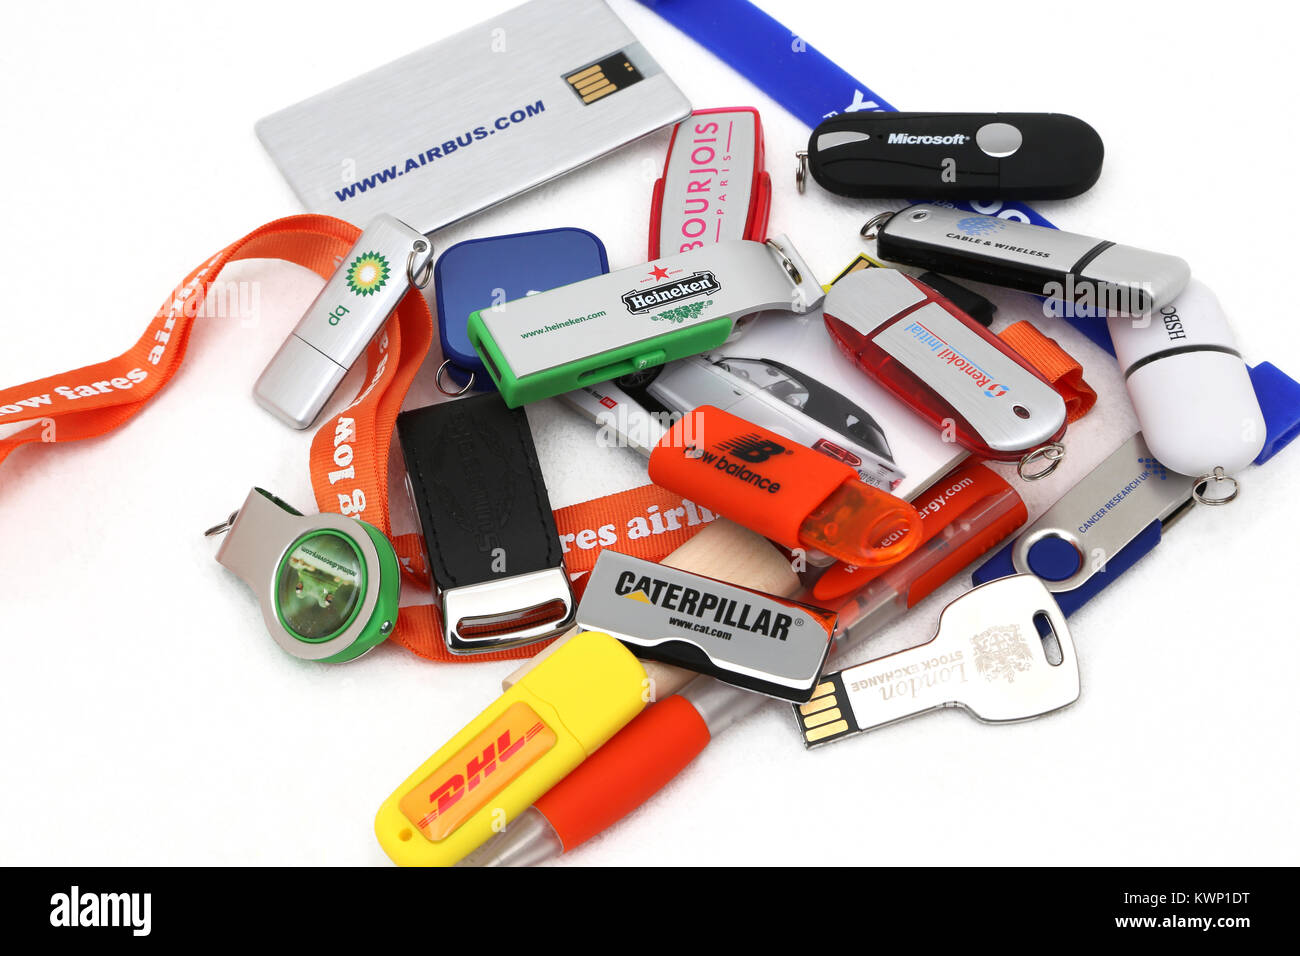 A Pile of Promotional USB Memory Sticks Stock Photo - Alamy